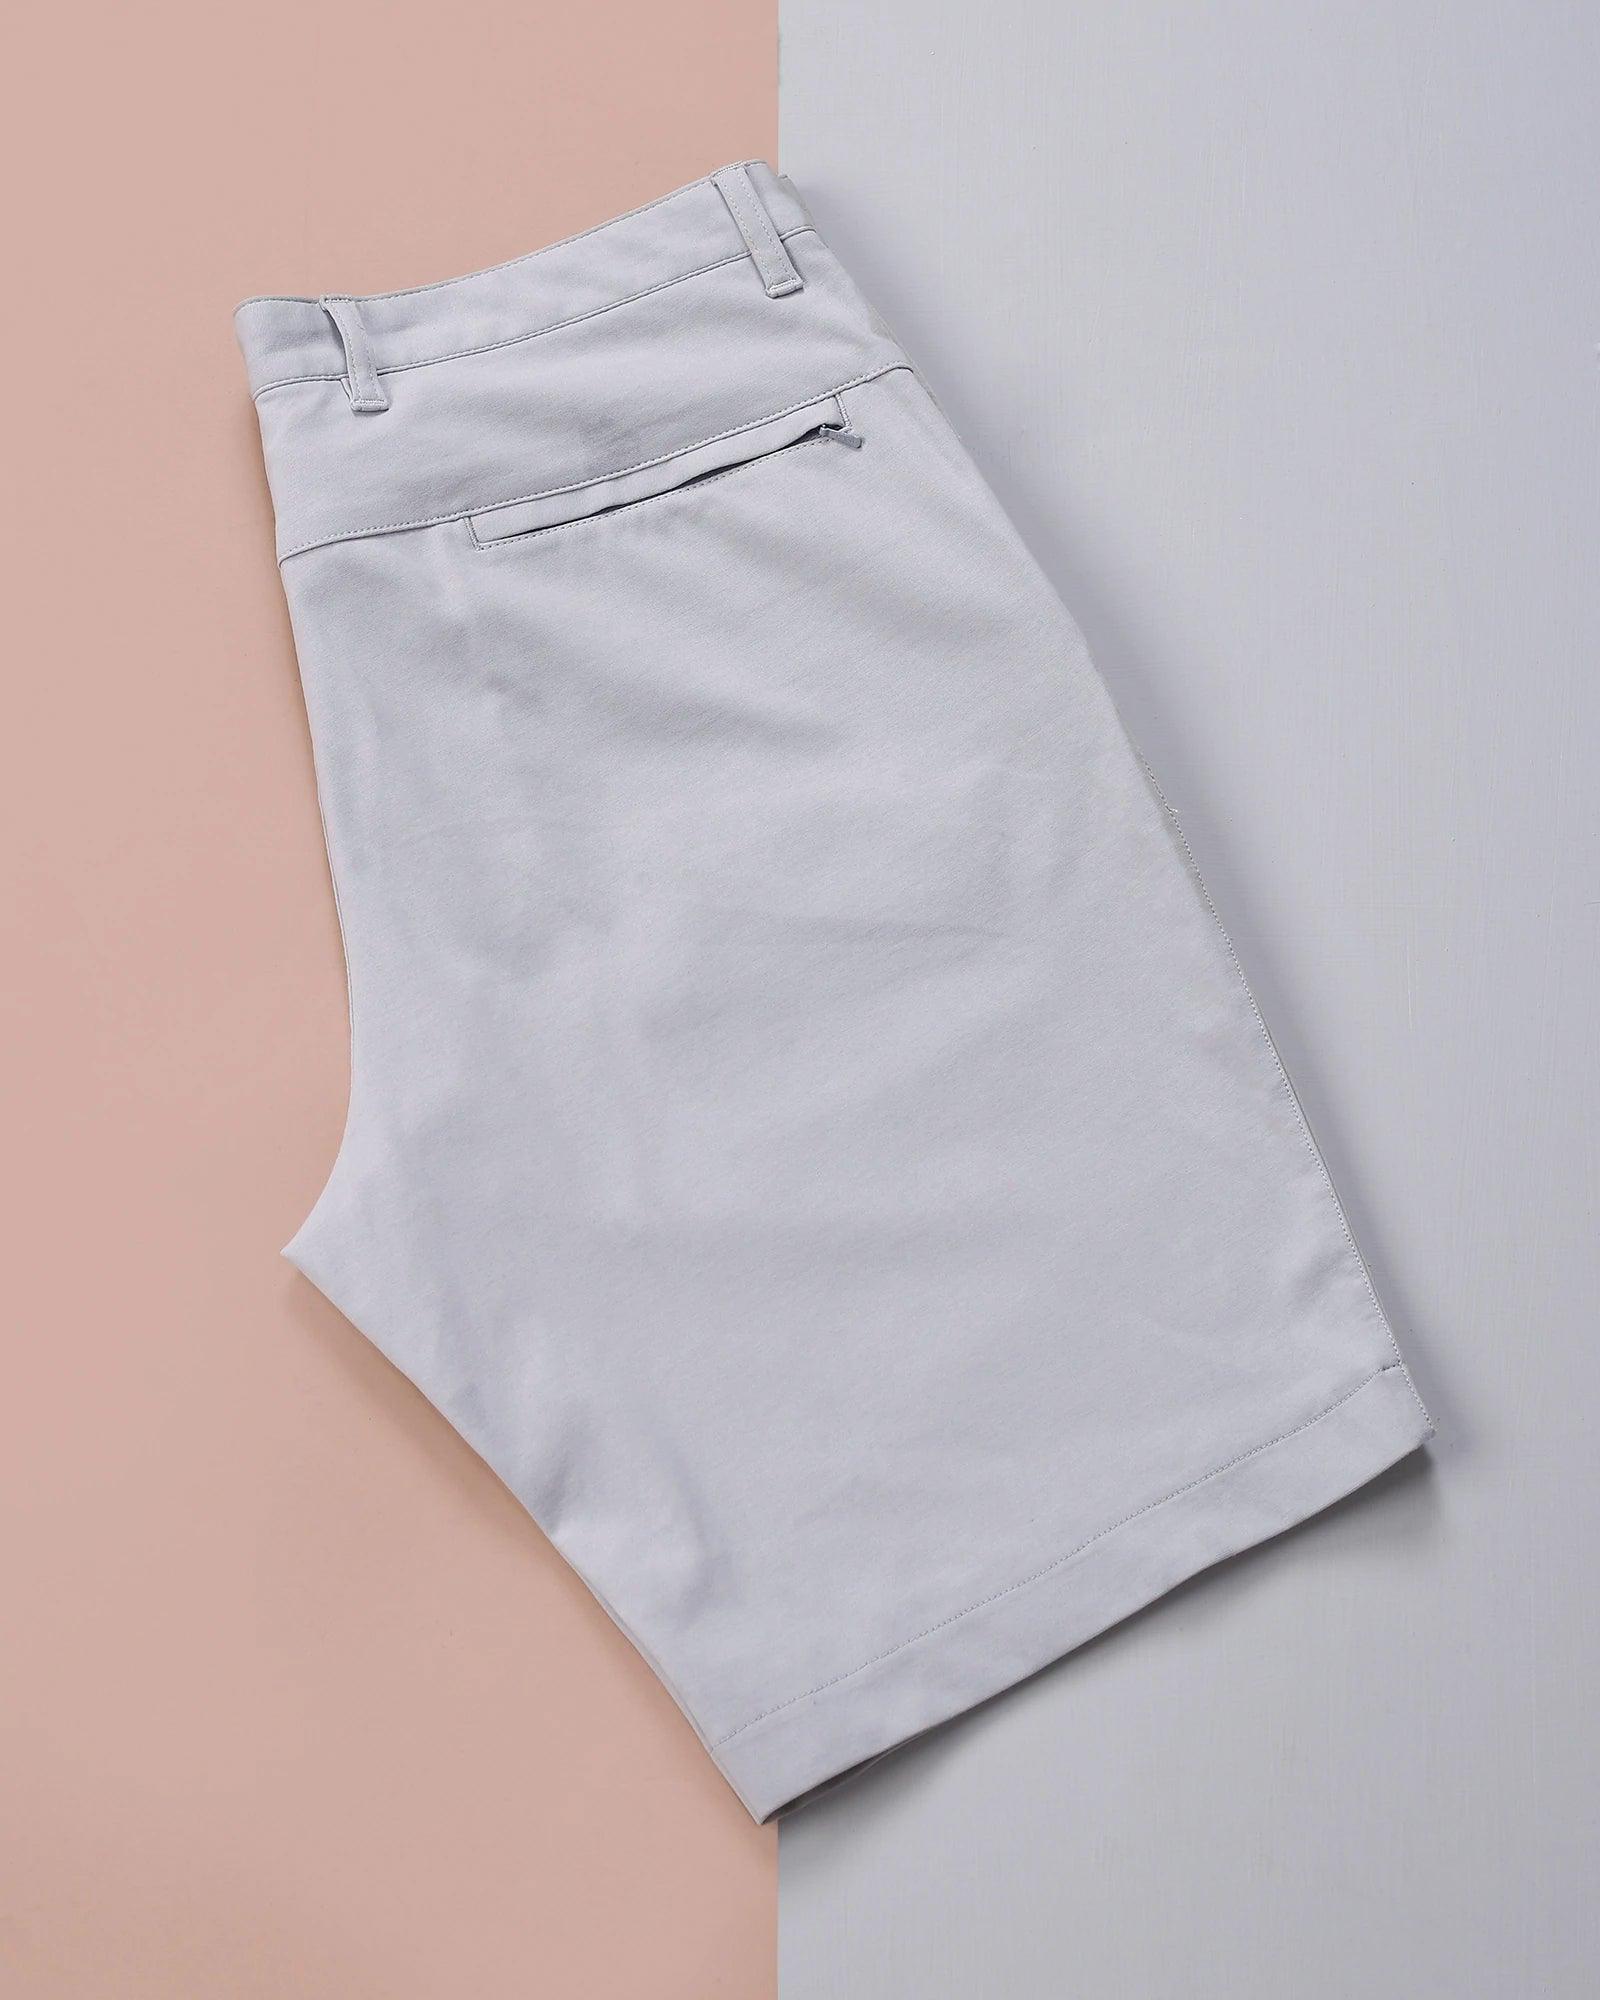 Casual Grey Solid Shorts - Iris